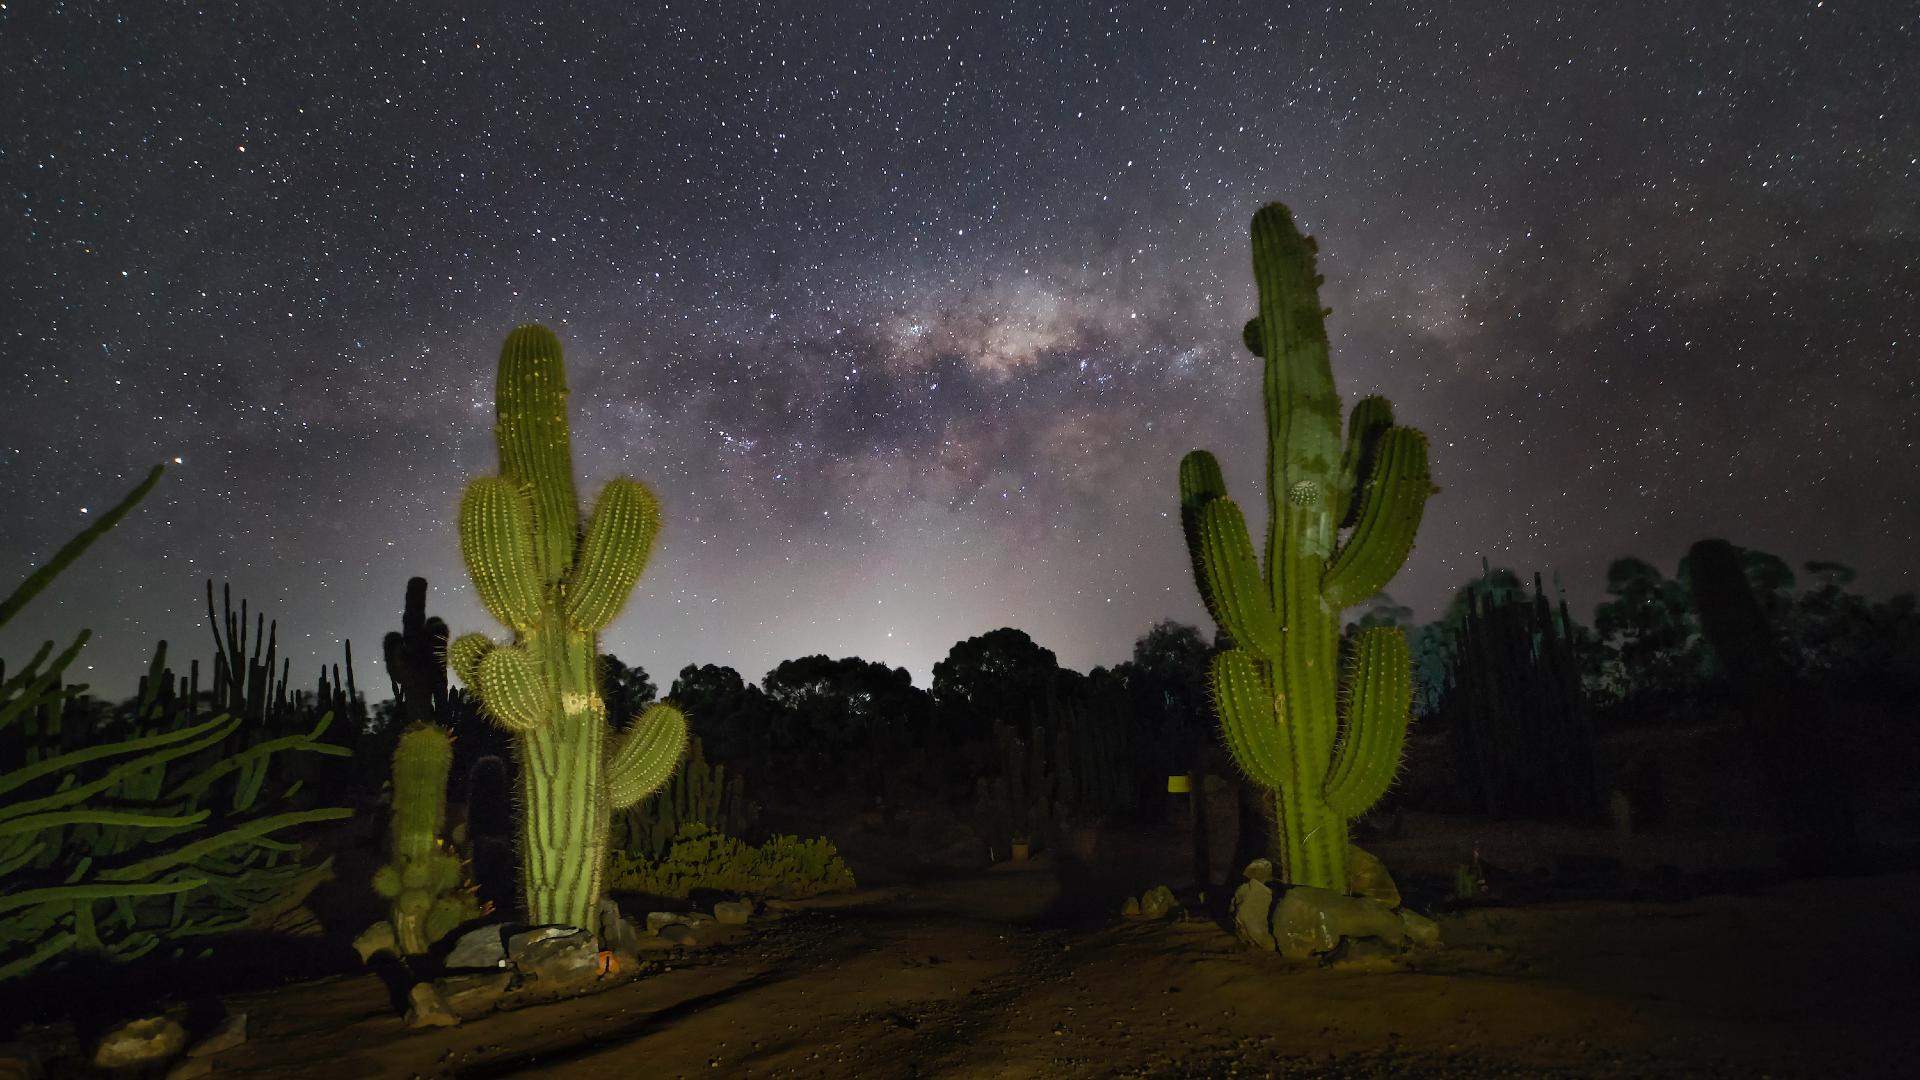 Stargazing with Cactus